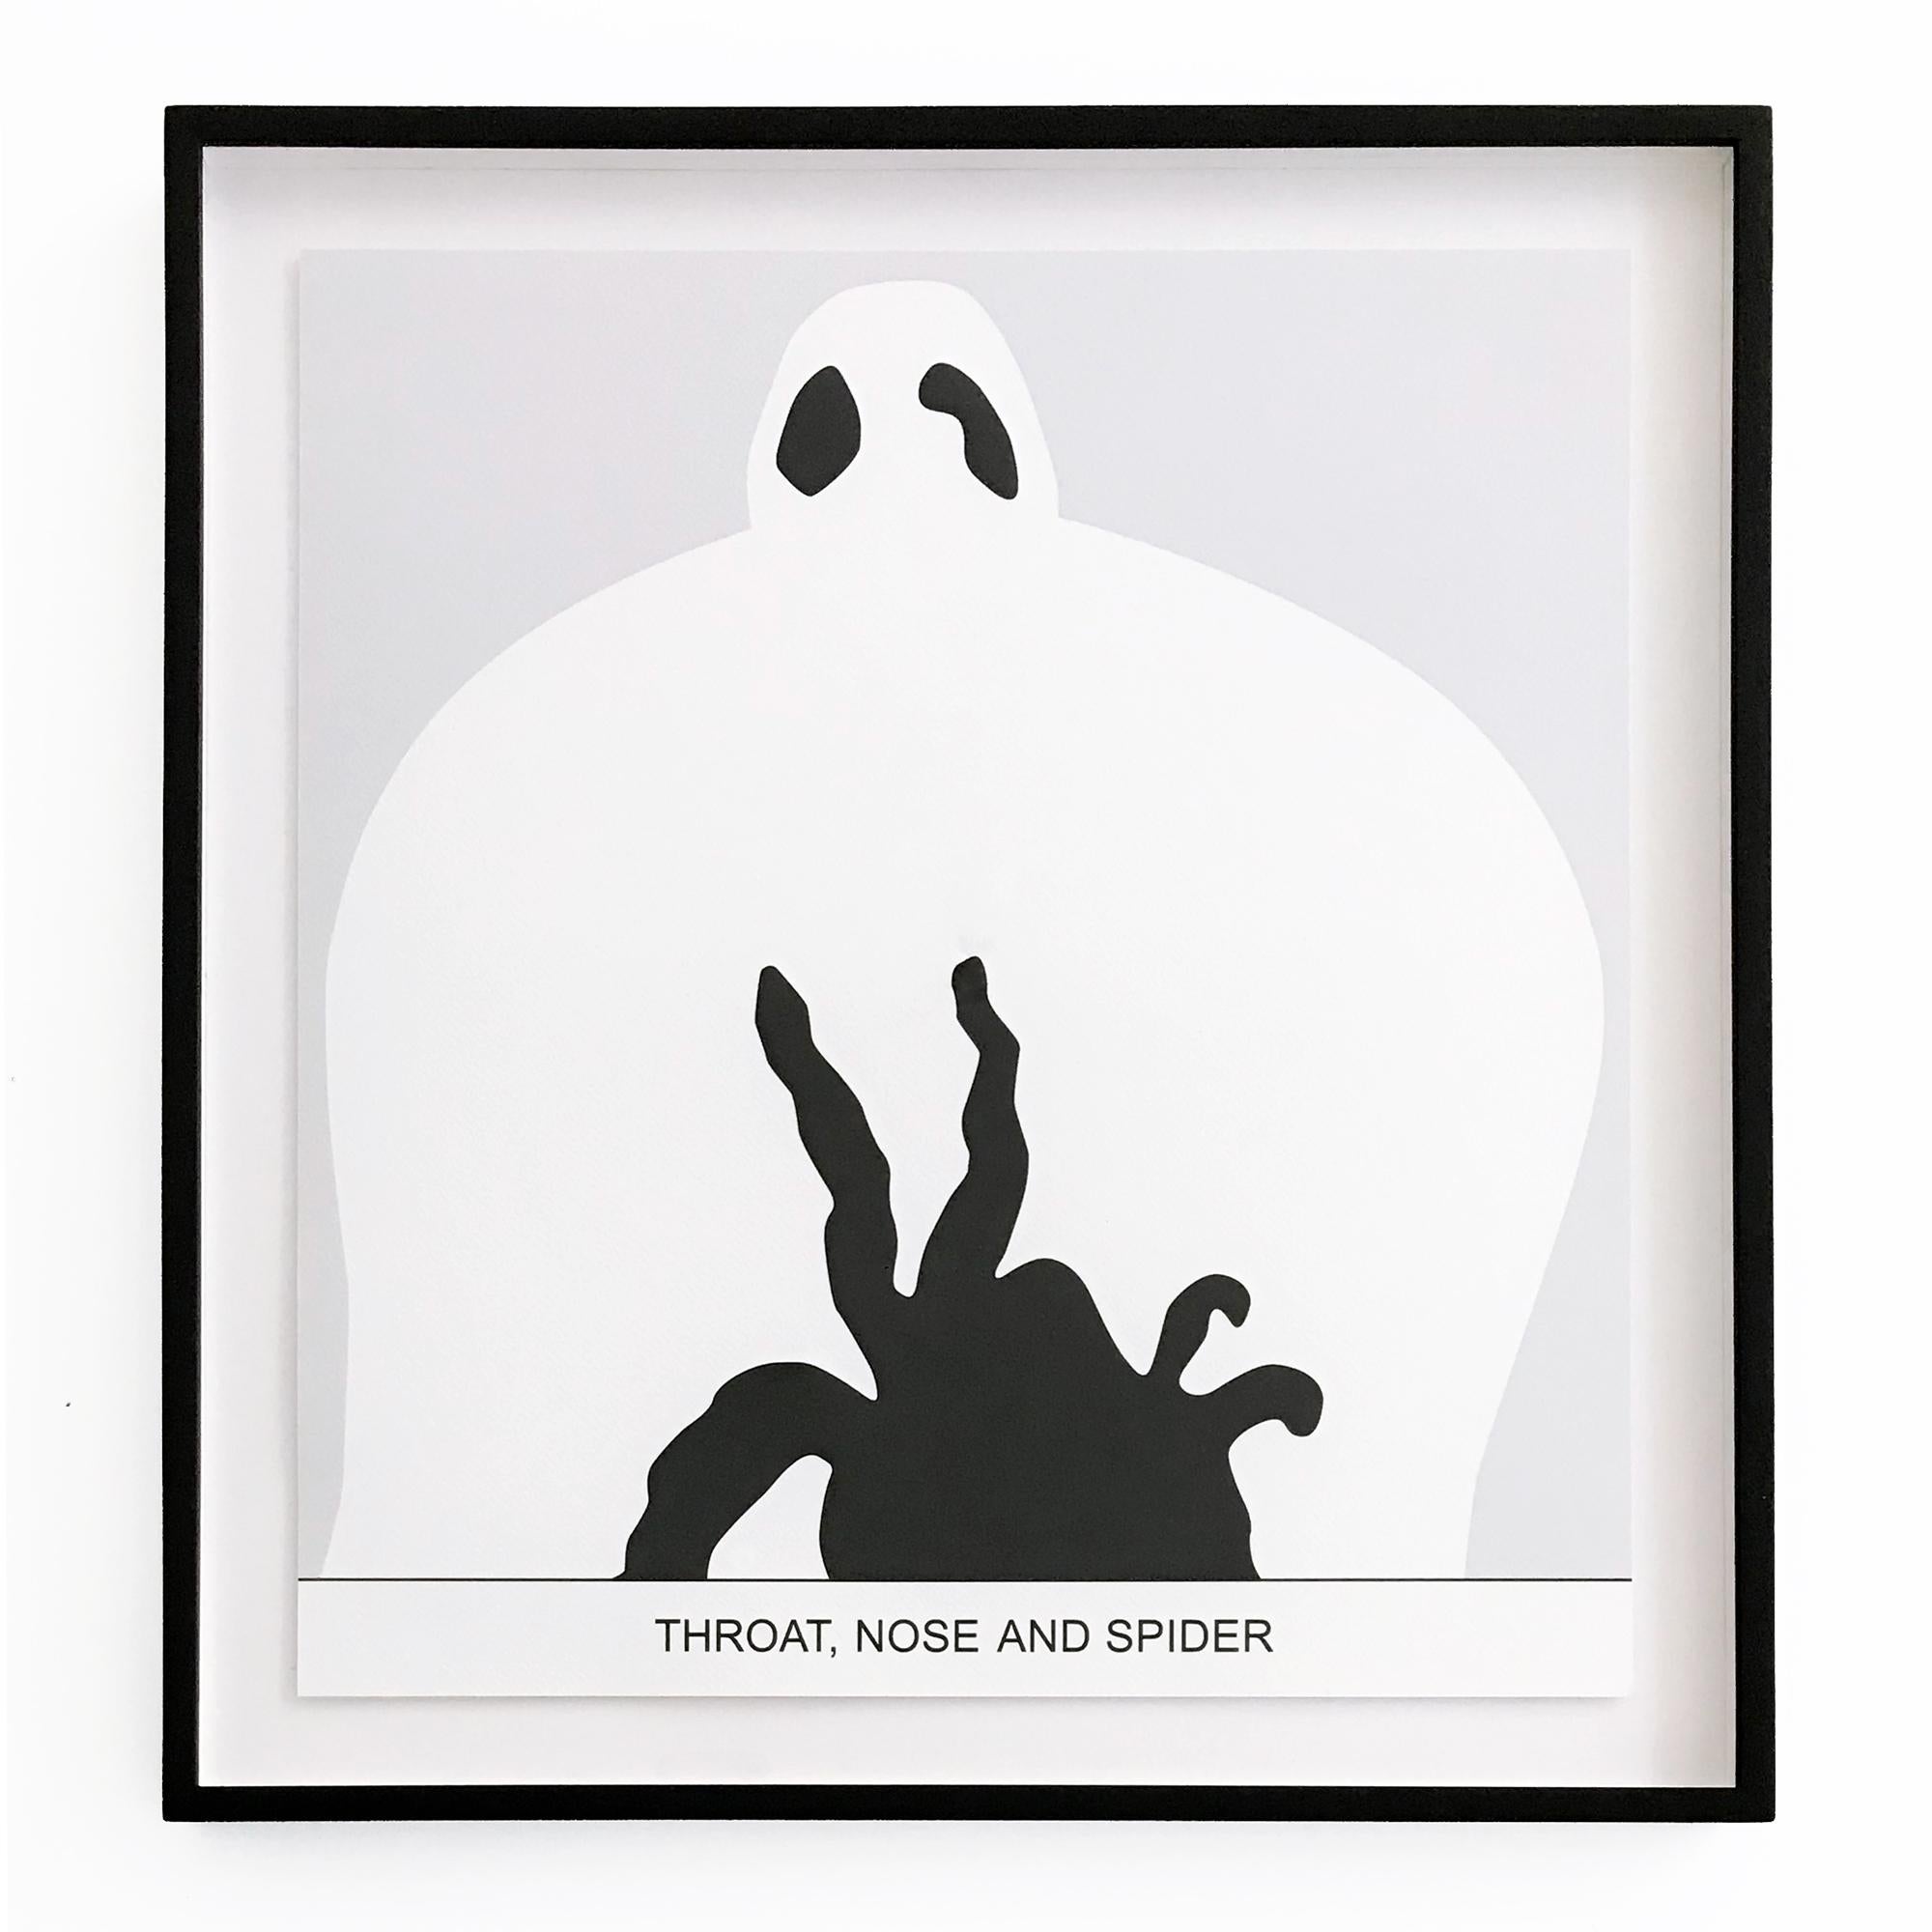 John Baldessari Abstract Print - Sediment: Throat, Nose and Spider, Contemporary Art, Conceptual Art, Abstract